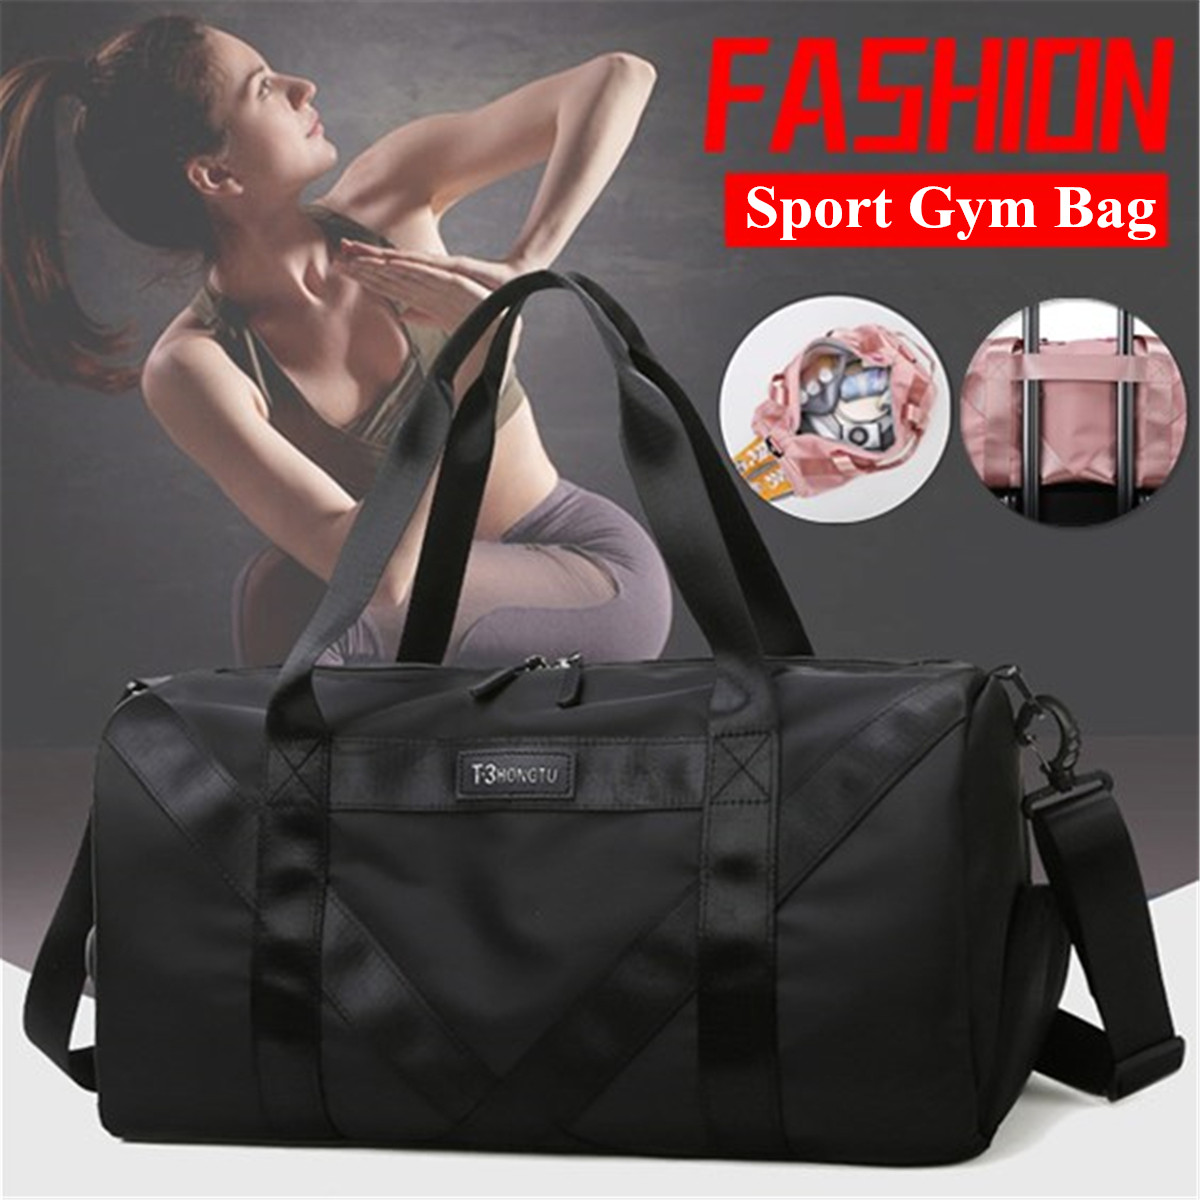 Waterproof-Dry-Wet-Seperation-Shoe-Compartment-Fitness-Yoga-Bag-Sports-Gym-Handbag-Duffle-Shoulder-B-1626955-2